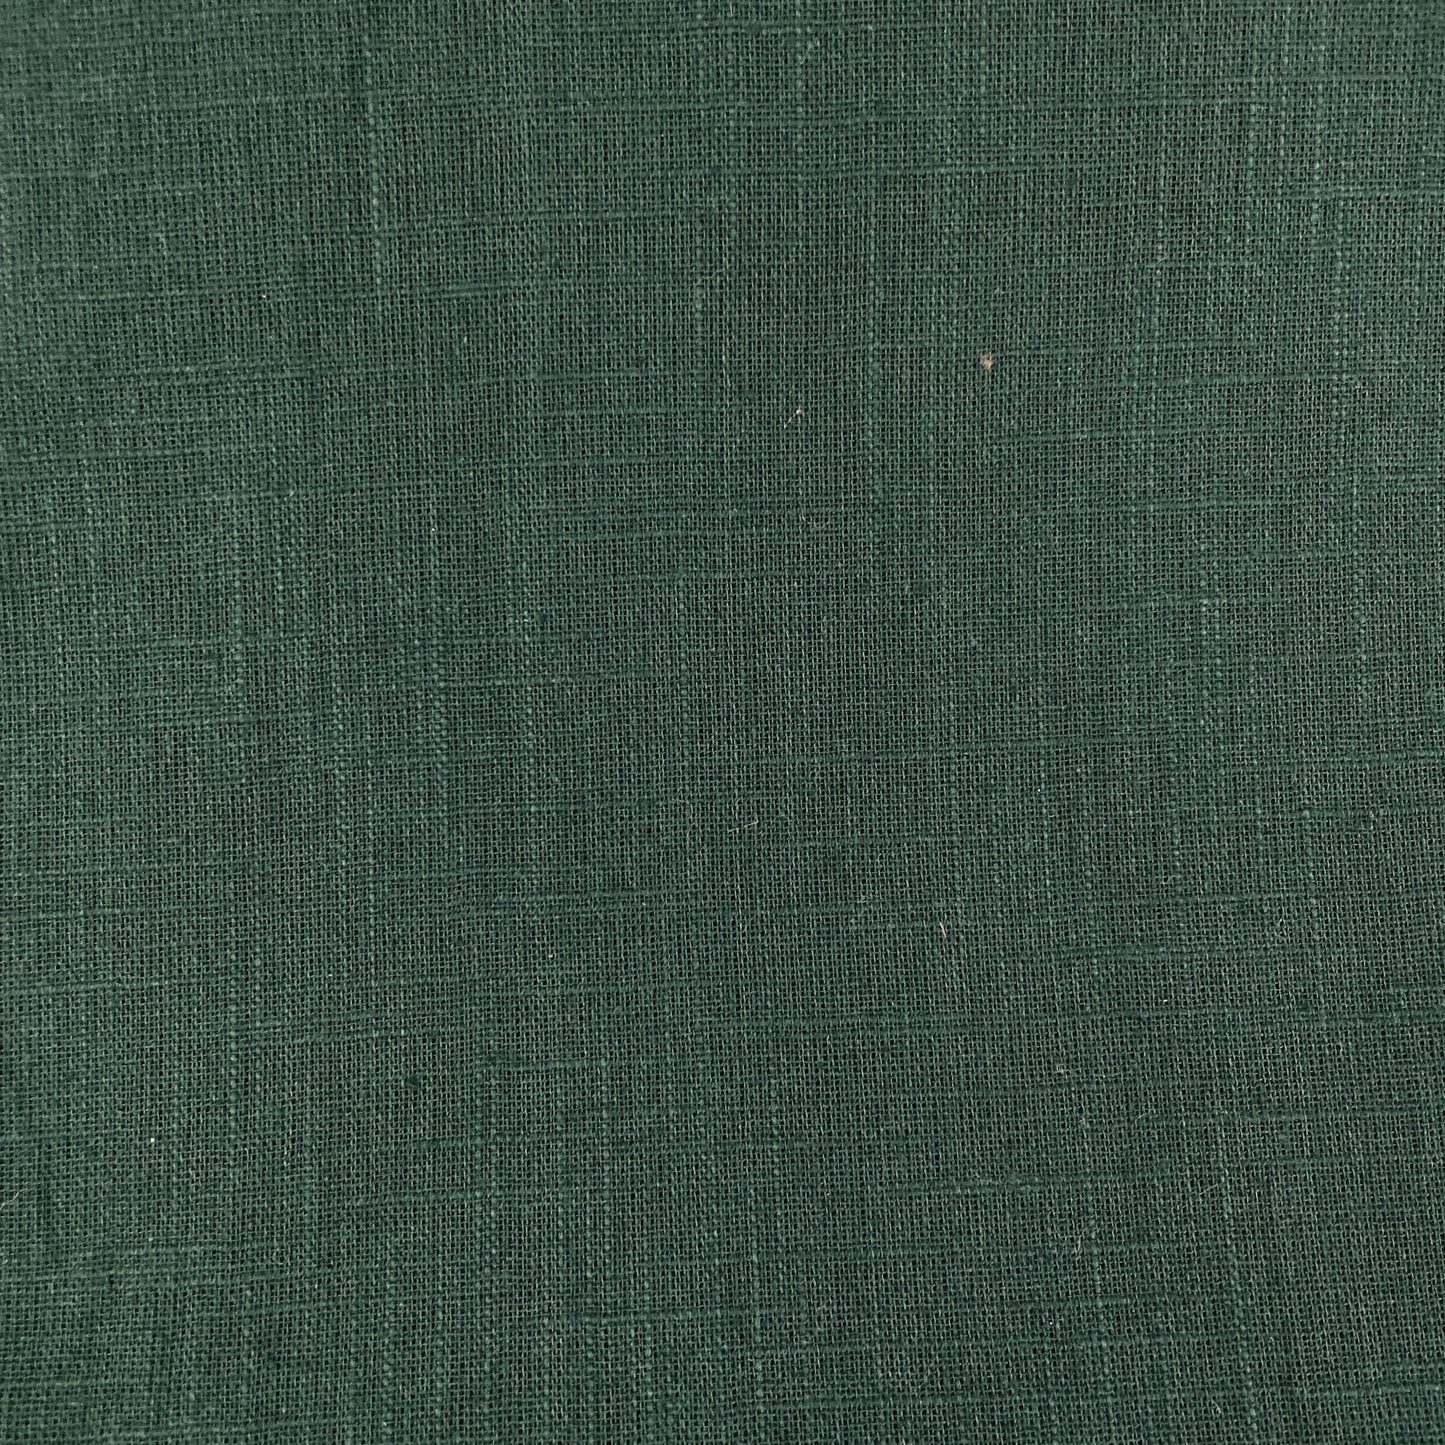 Exclusive Cotton Linen Slub Dark Green Solid Fabric 